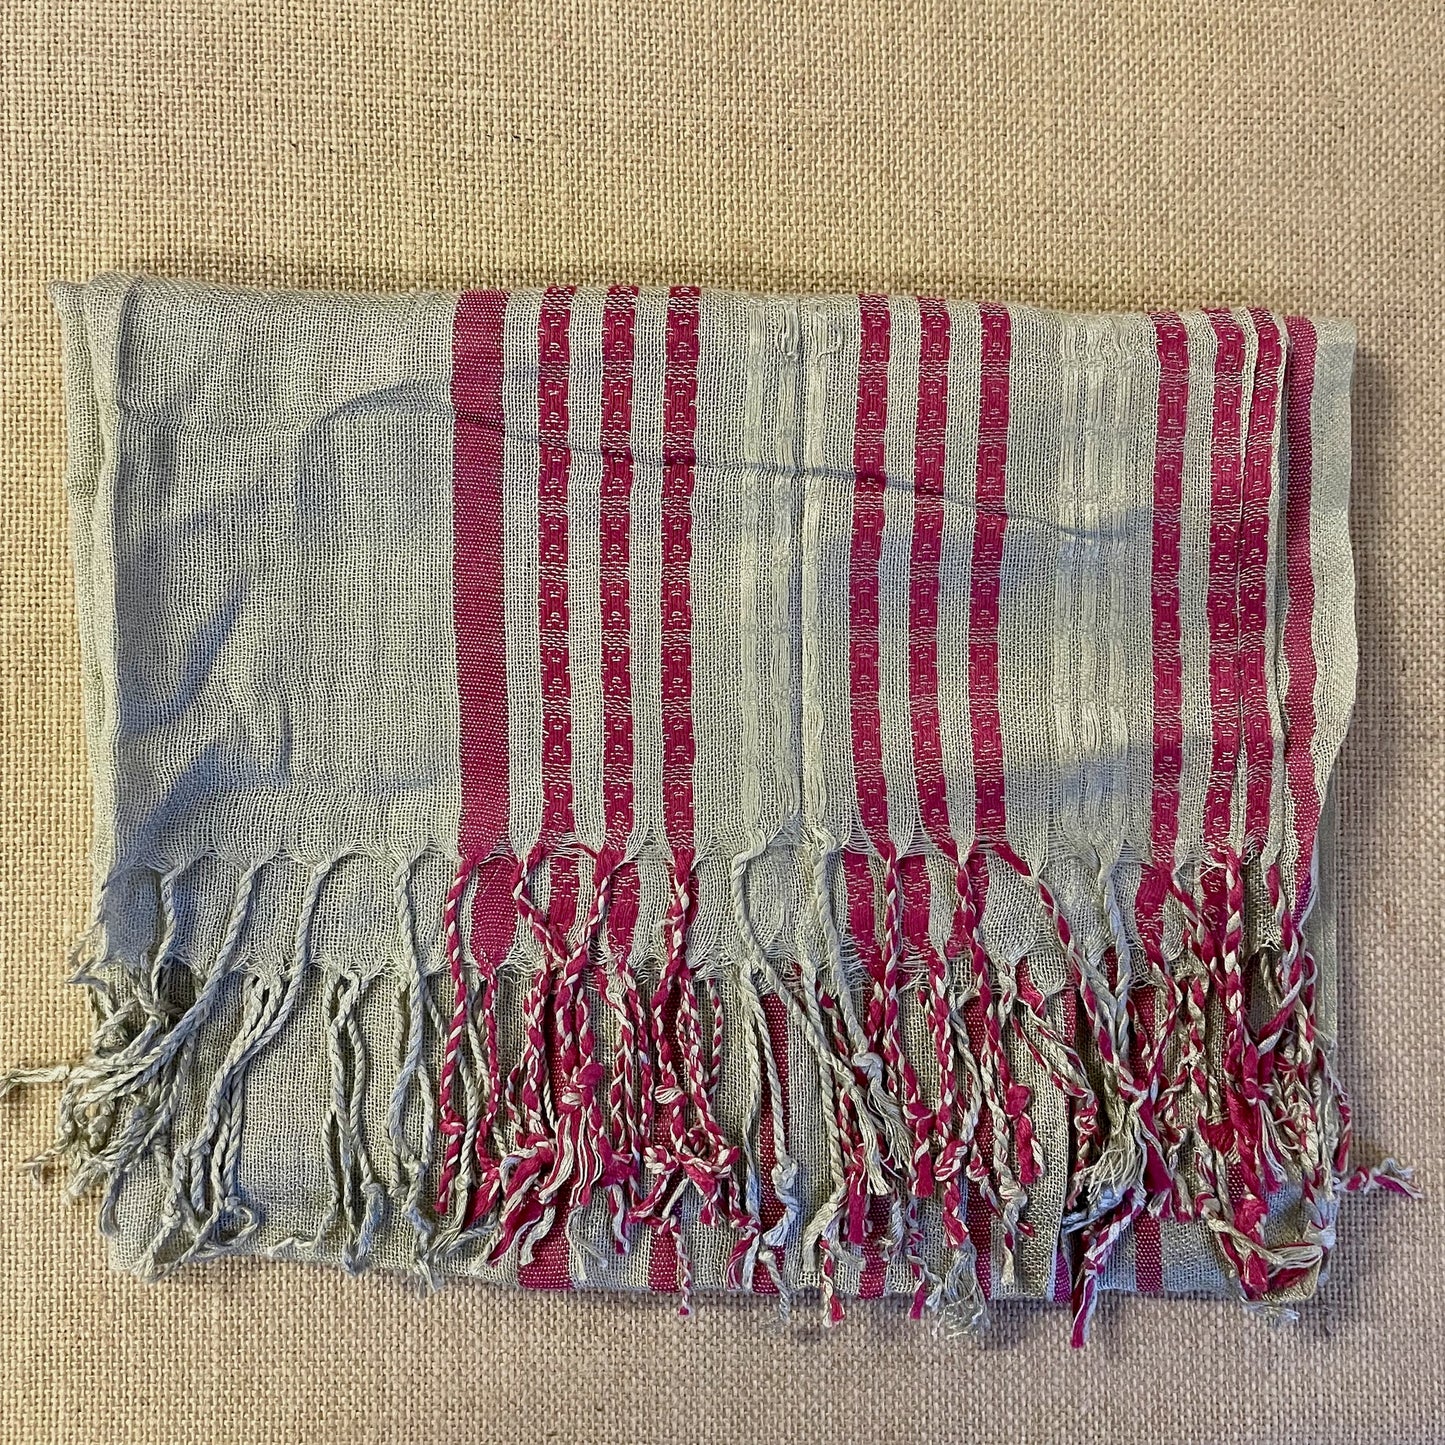 Handwoven Cactus Silk Ecru & Pink Striped Scarf folded